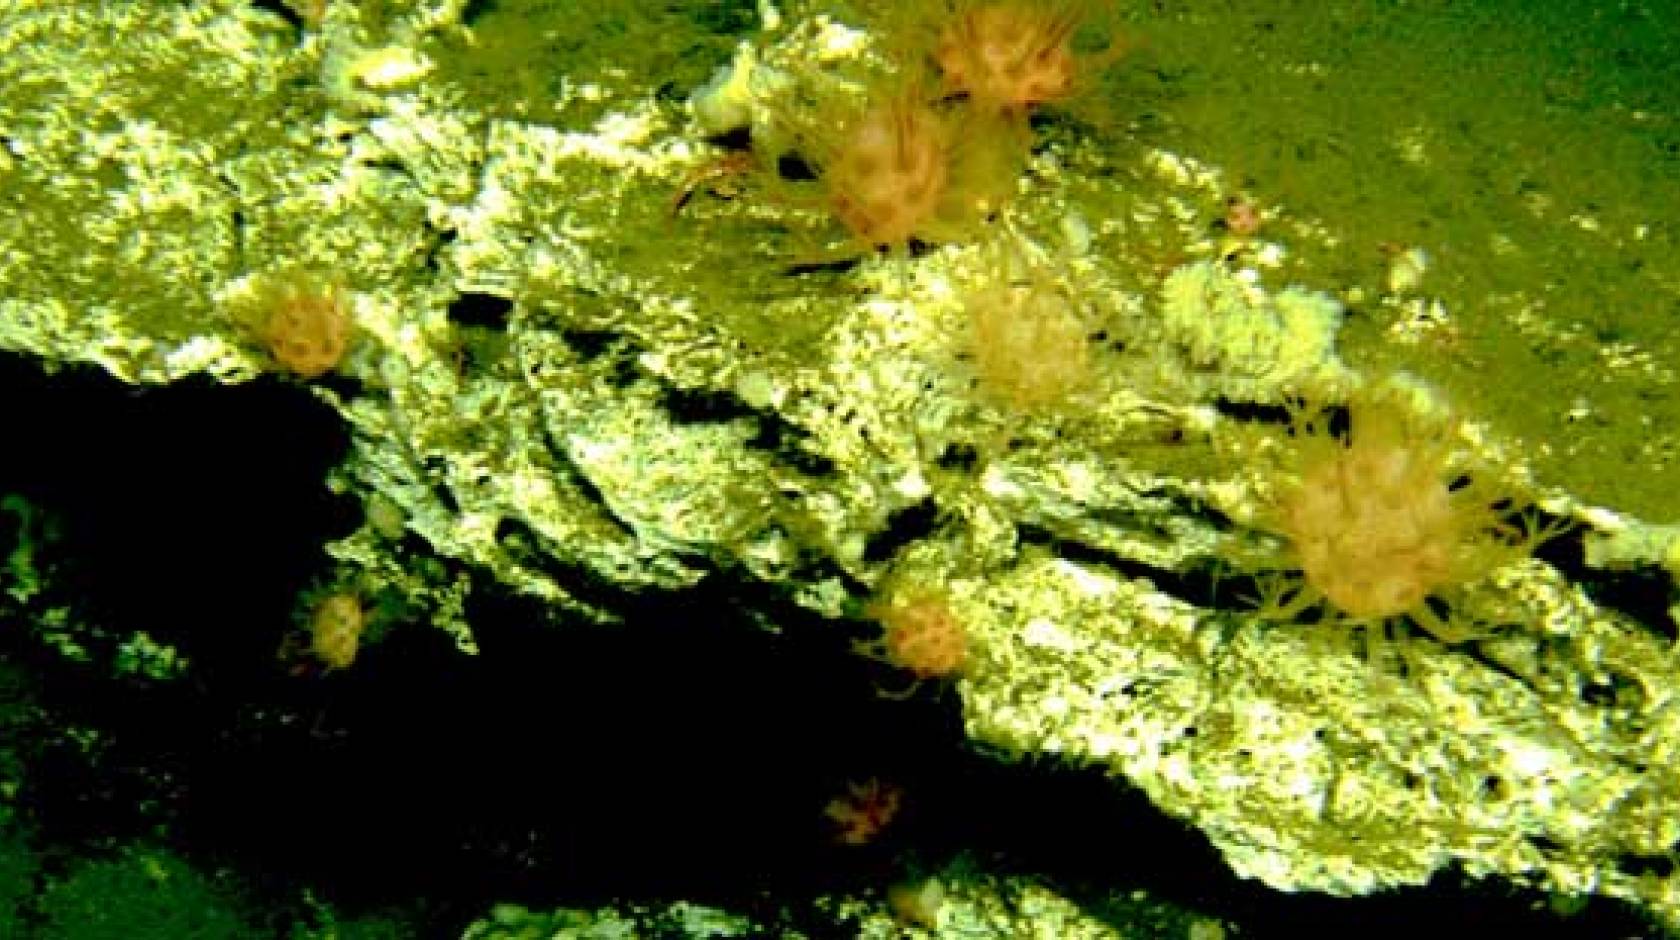 deep sea ecosystem - carbonates